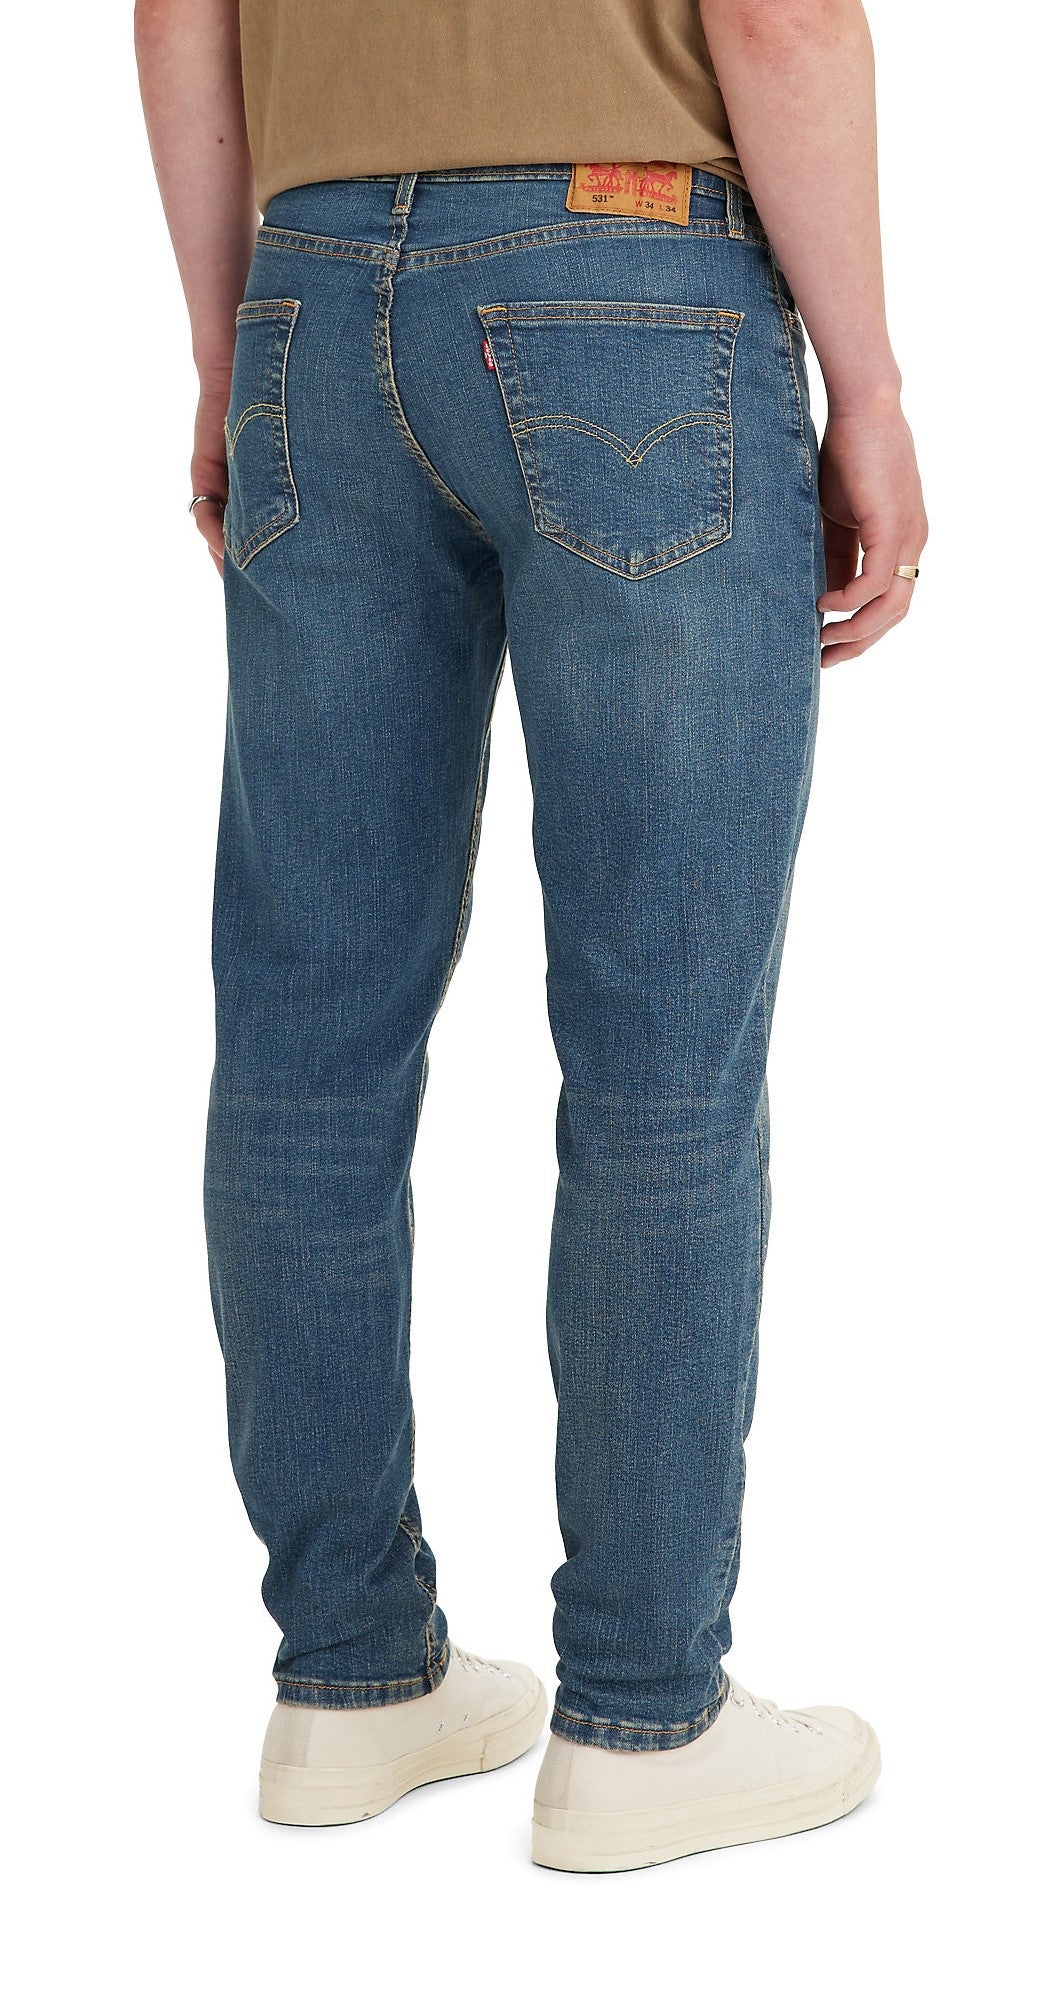 pantalones-jeans-levis-531-athletic-slim-p-caball